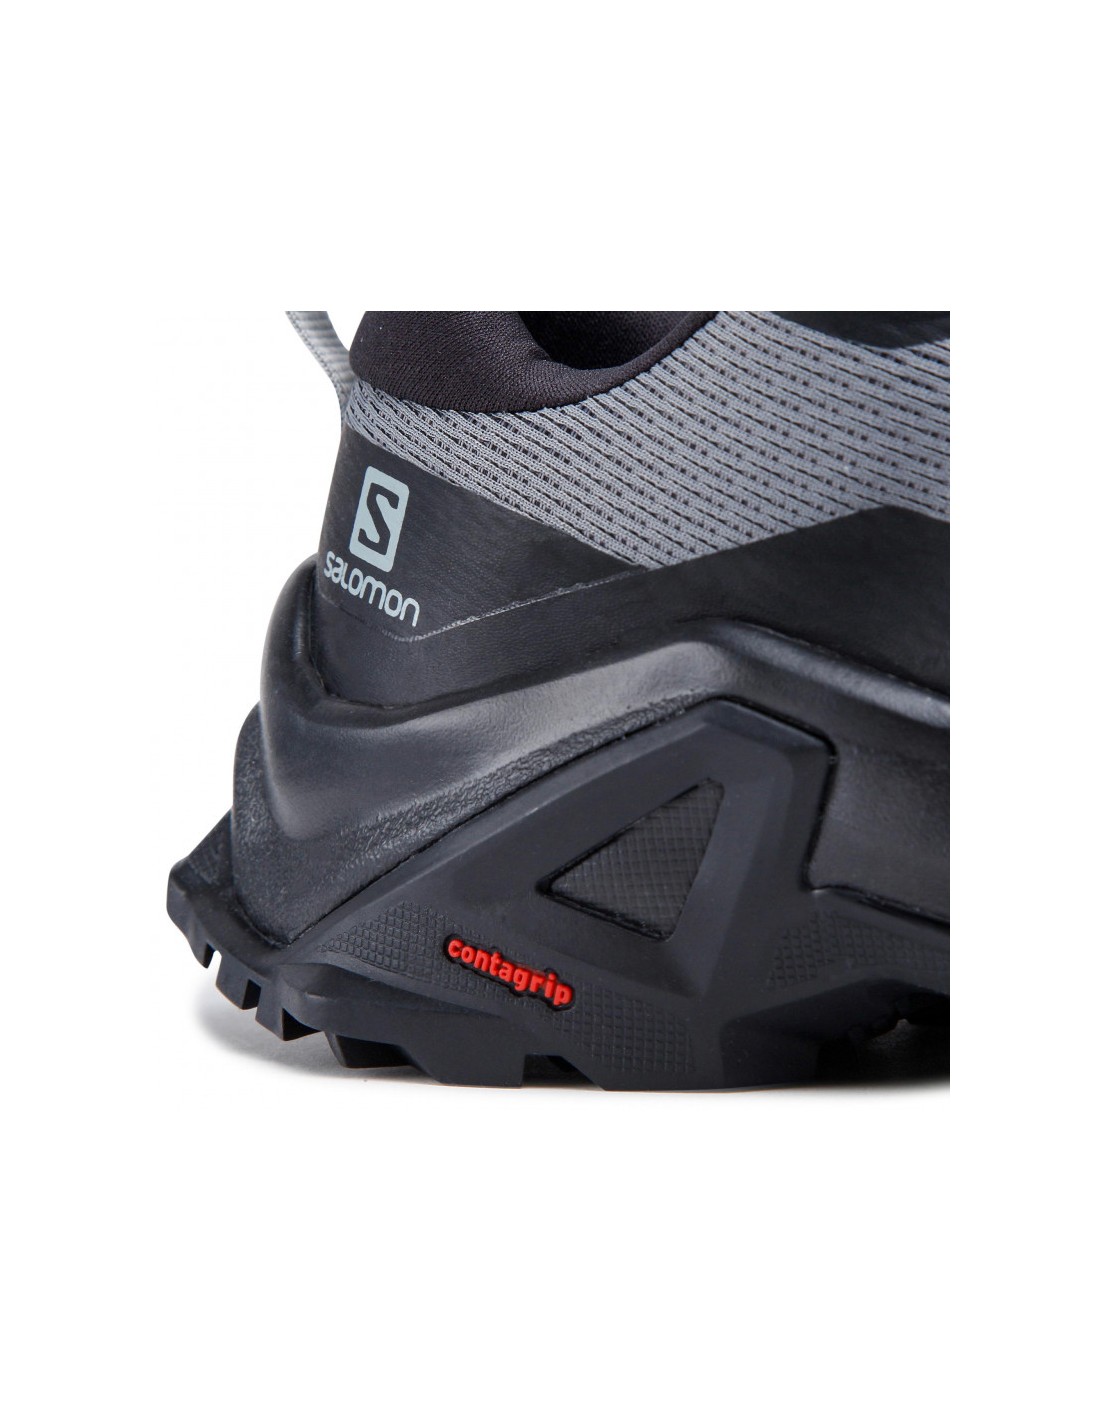 Zapatillas SALOMON X REVEAL 2 GORETEX L41623300 Negro  Puber Sports. Tu  tienda de deportes y moda deportiva.